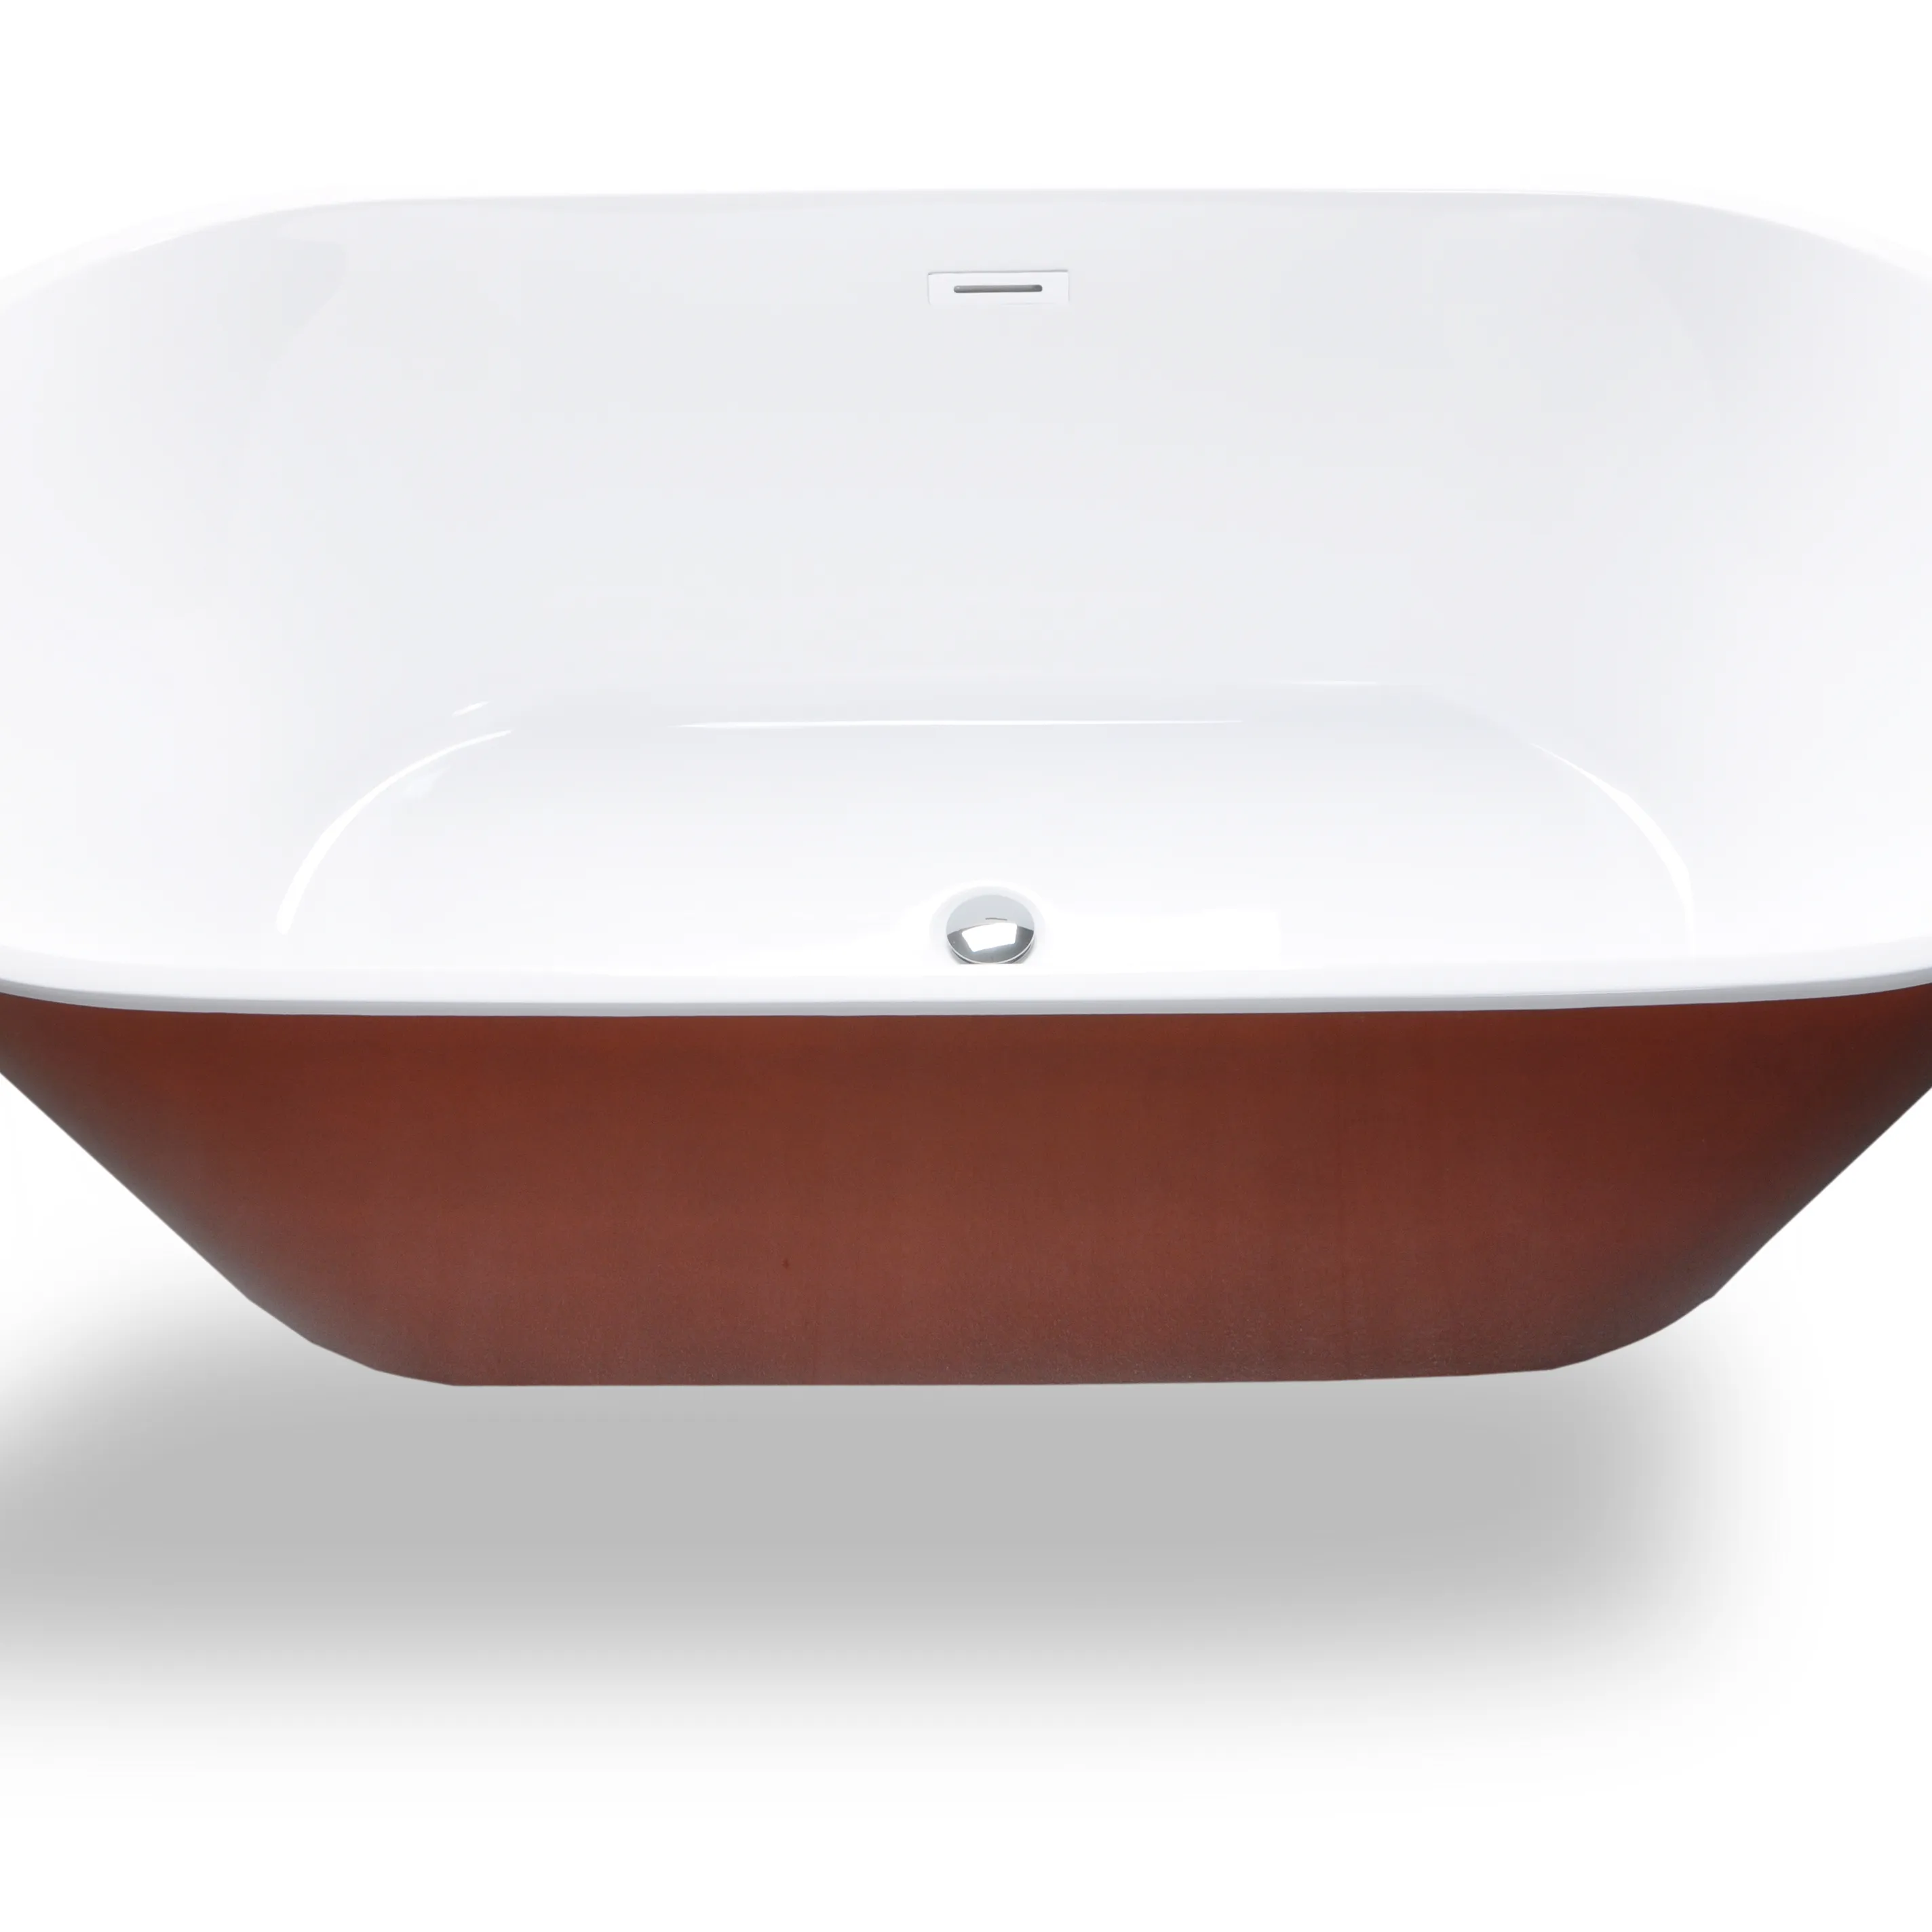 Overflow bath room tubs Copper surface freestanding acrylic bathtub